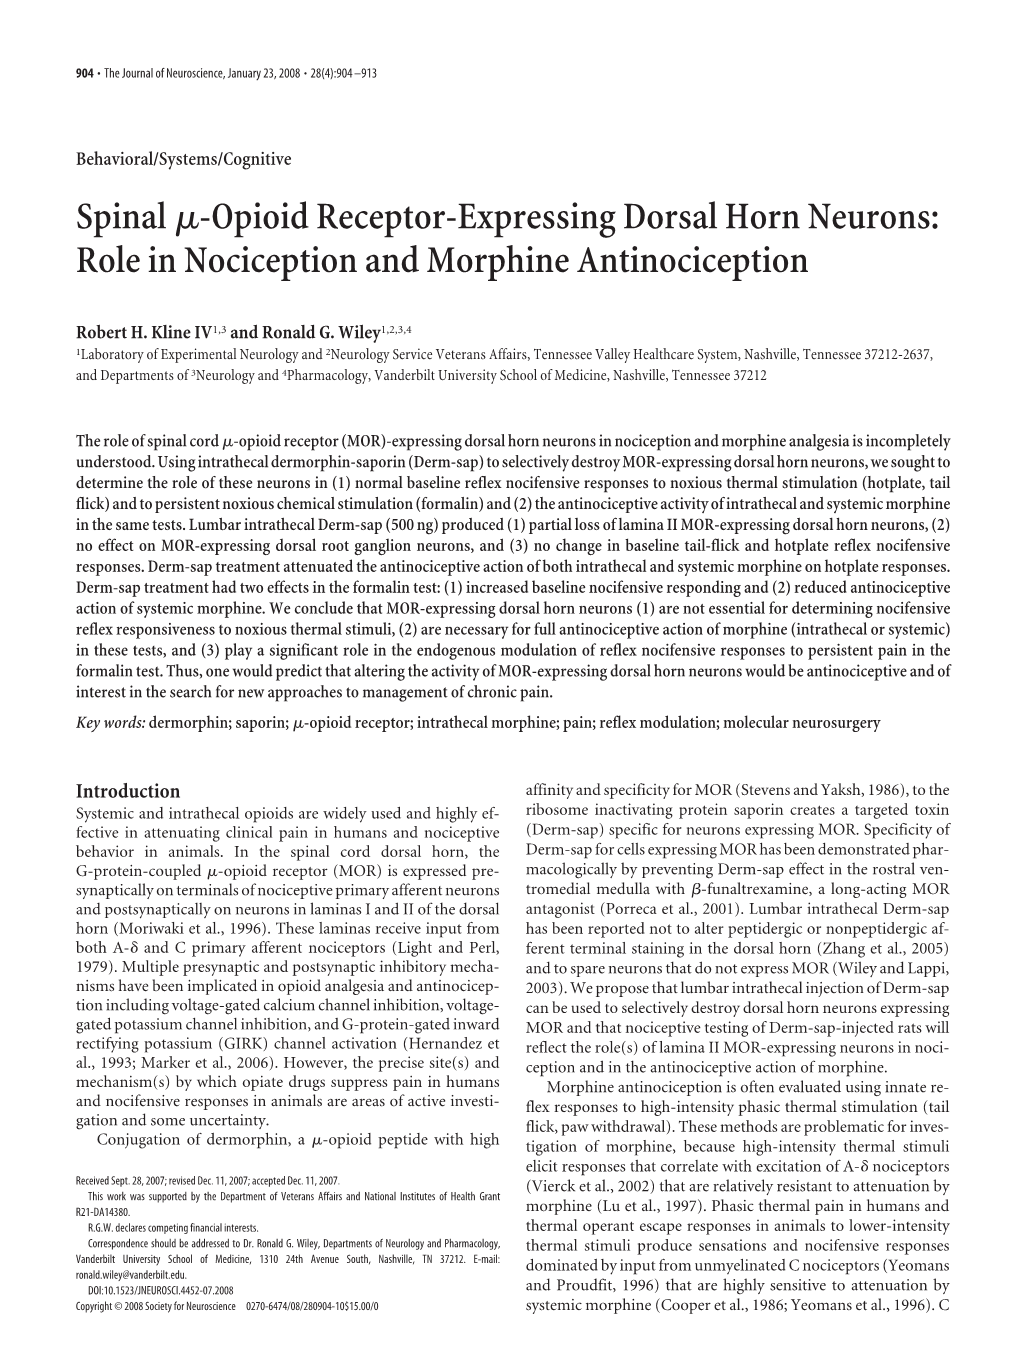 Spinalμ-Opioid Receptor-Expressing Dorsal Horn Neurons